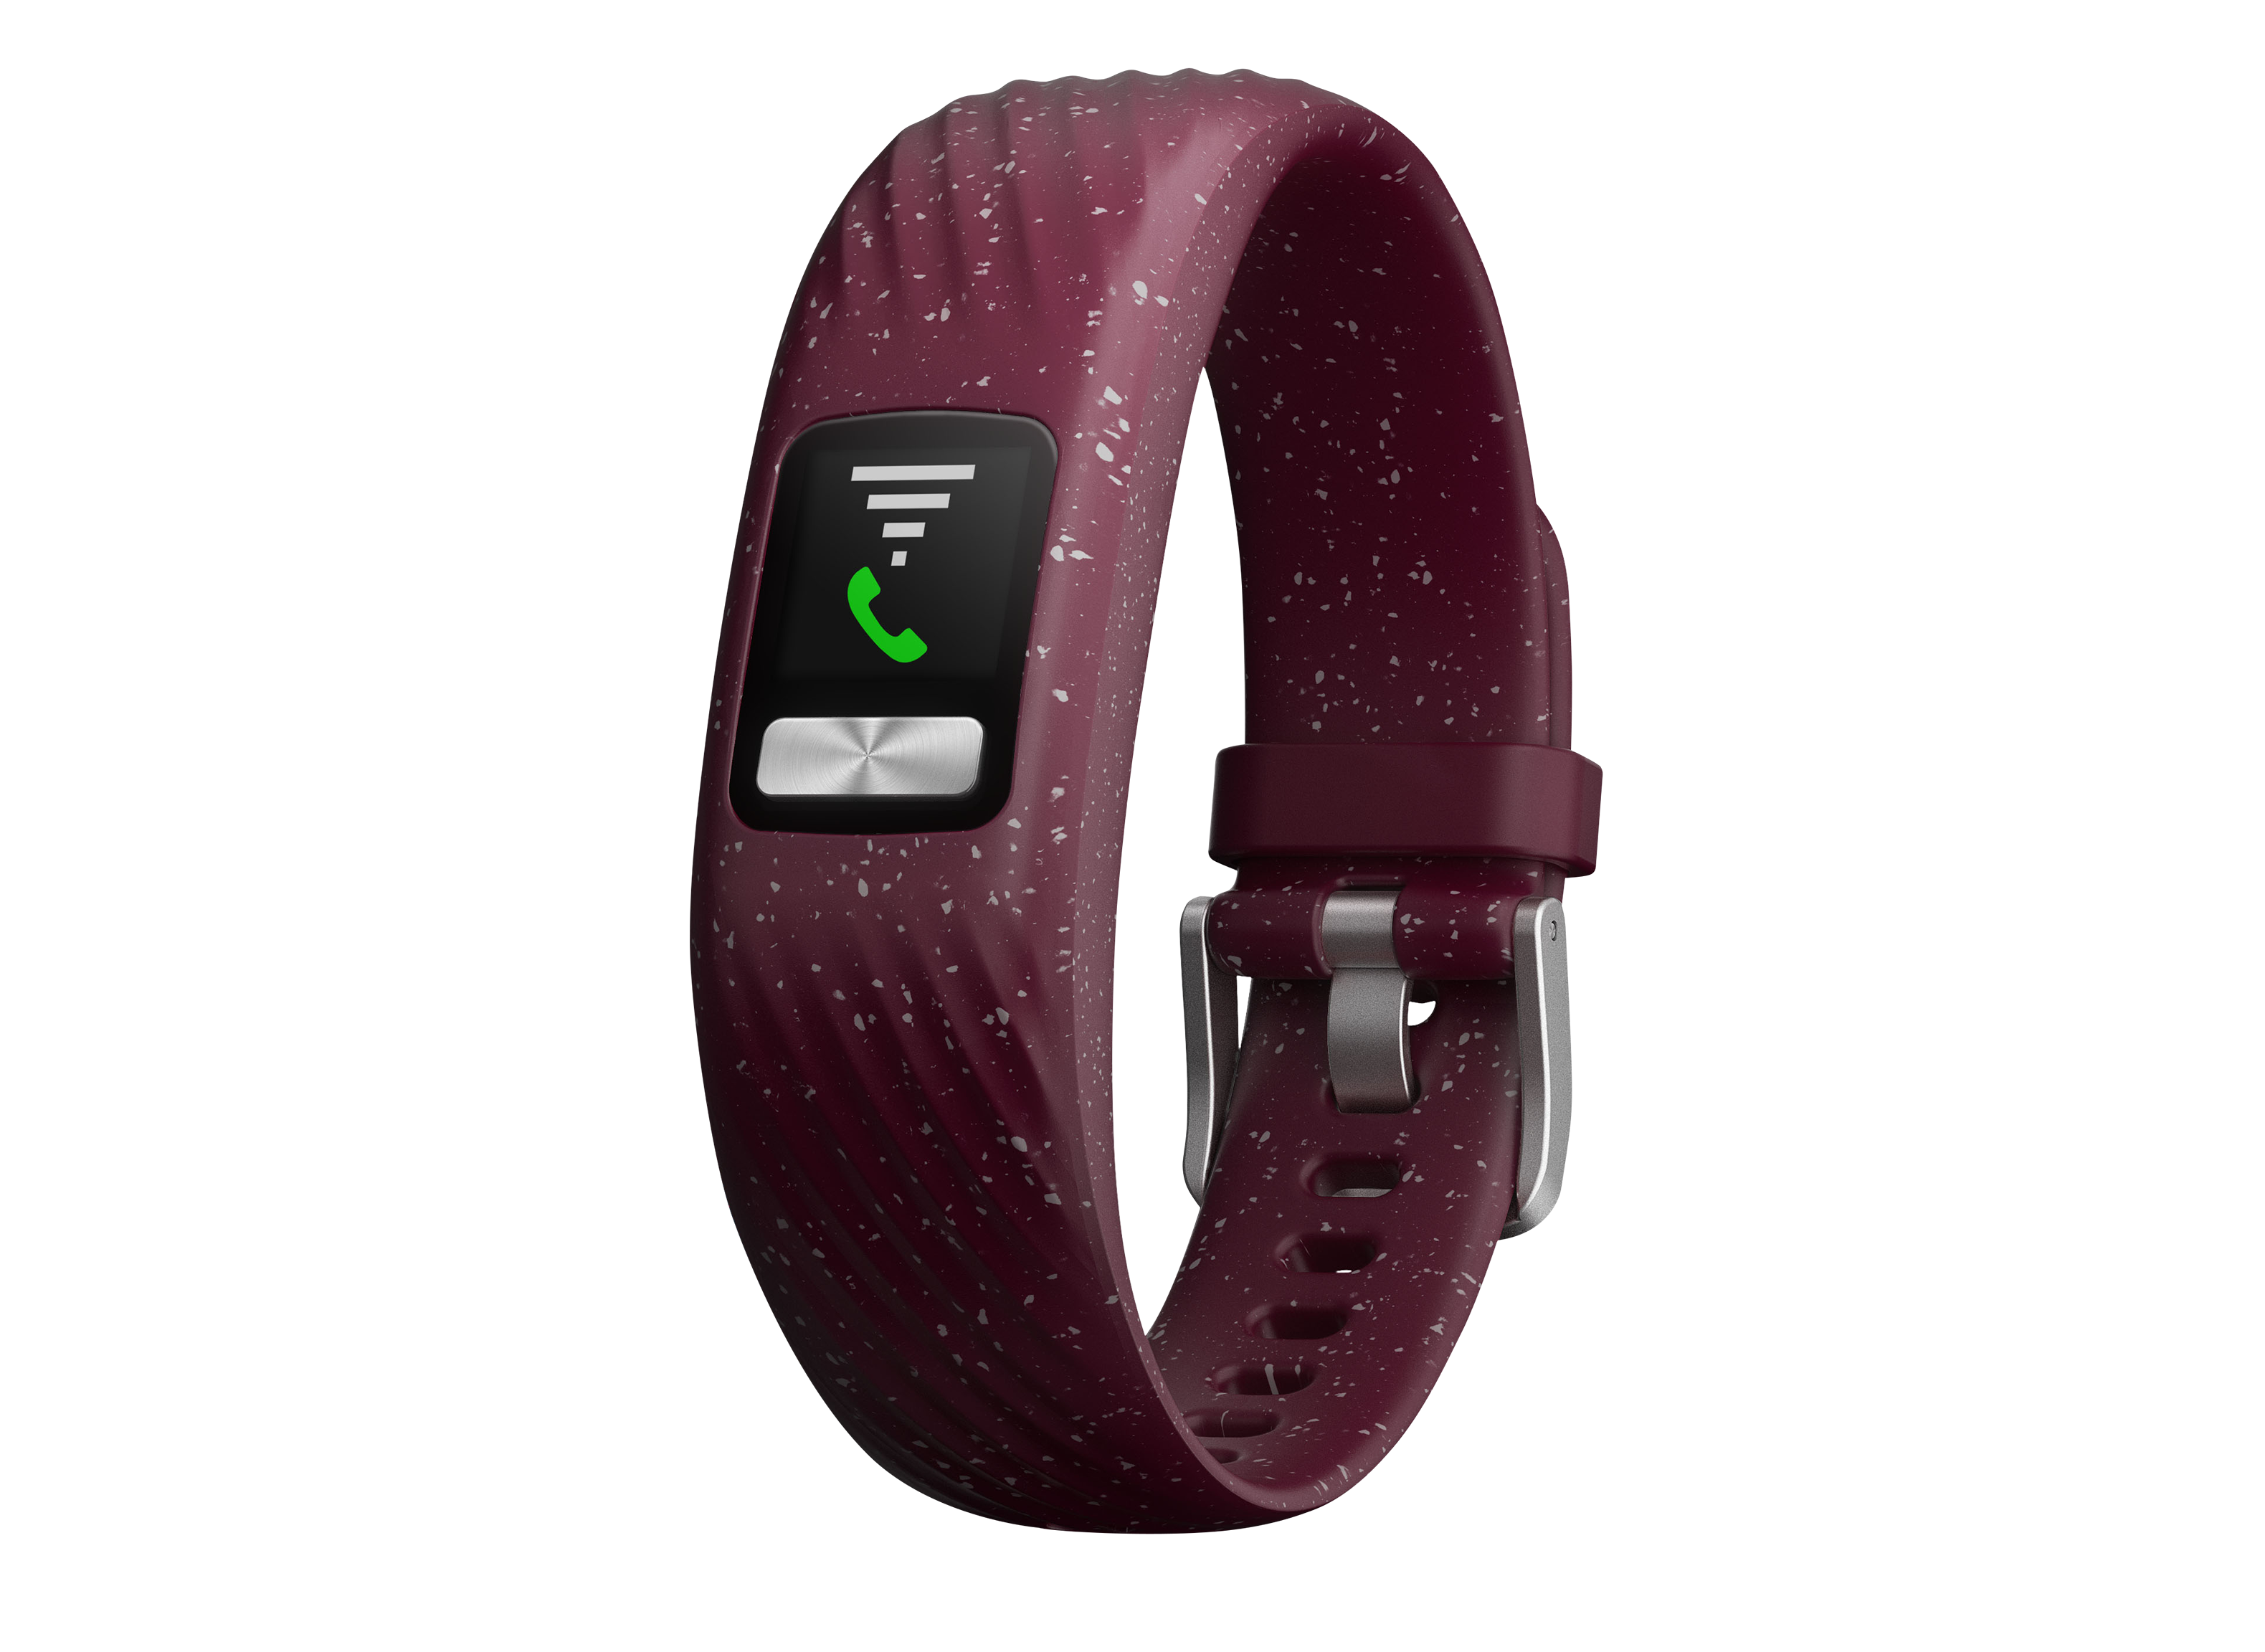 Garmin Vivofit 4 Fitness Tracker Review - Consumer Reports